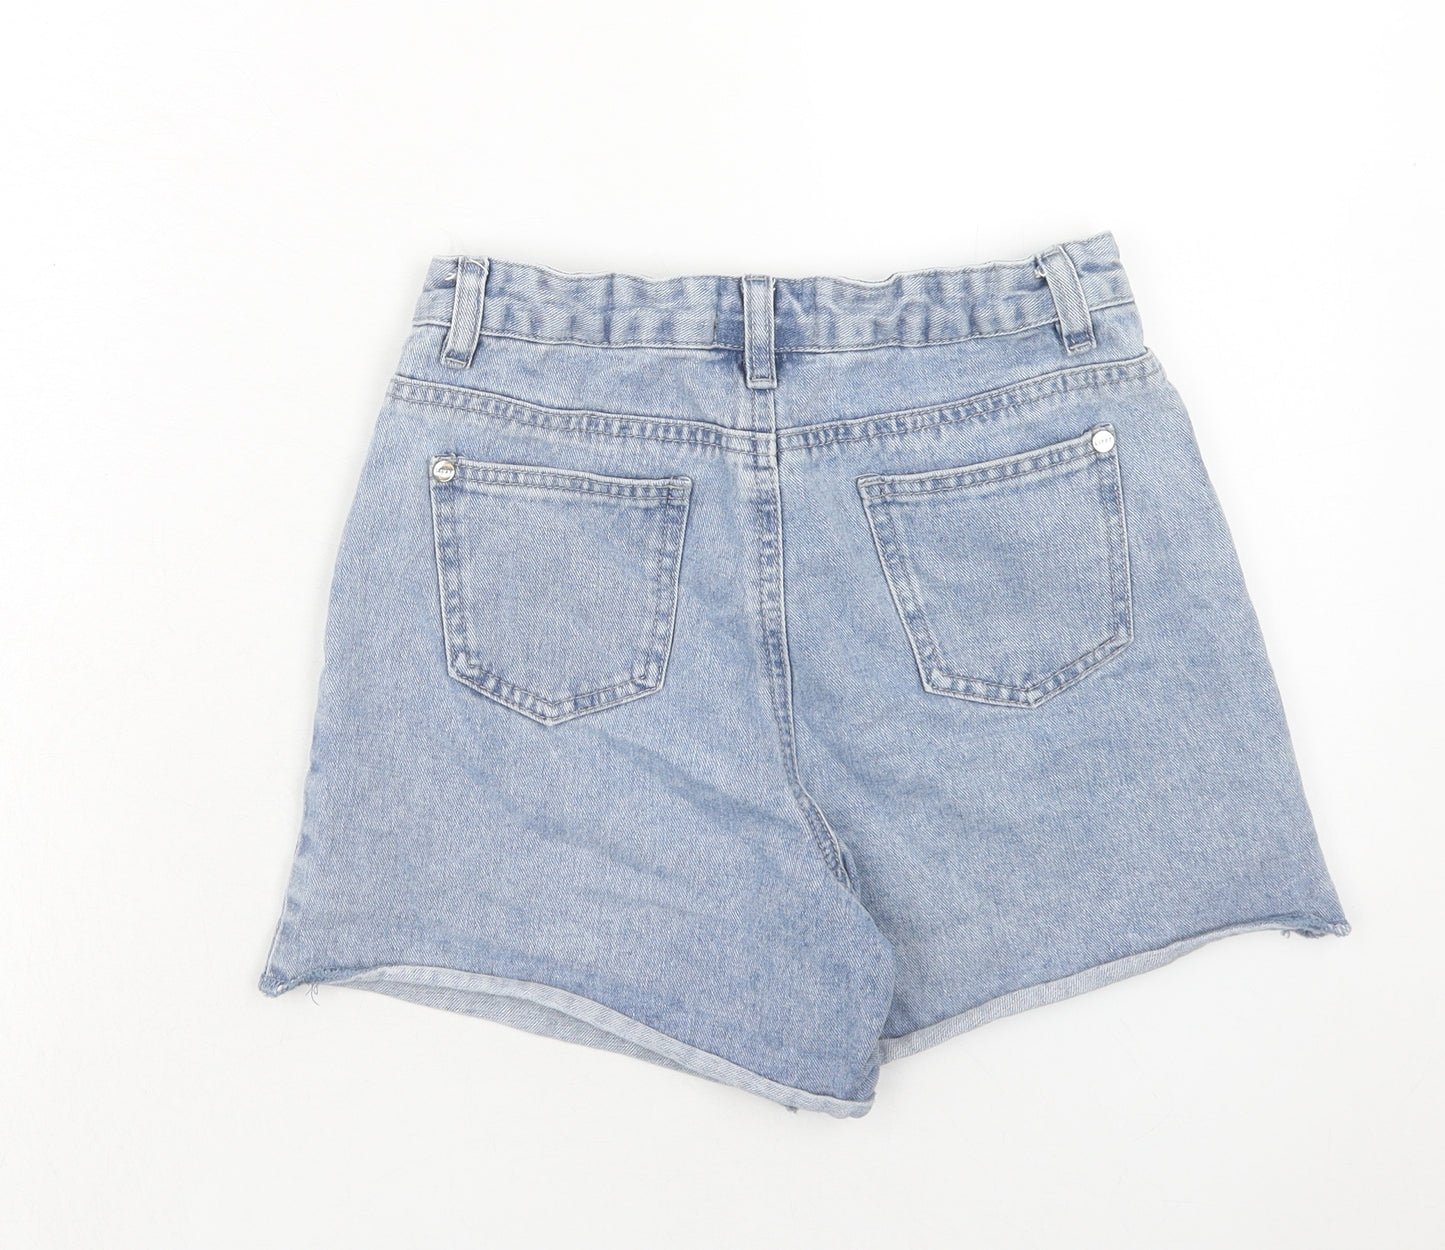 Lipsy Girls Blue Cotton Bermuda Shorts Size 13-14 Years Regular Zip